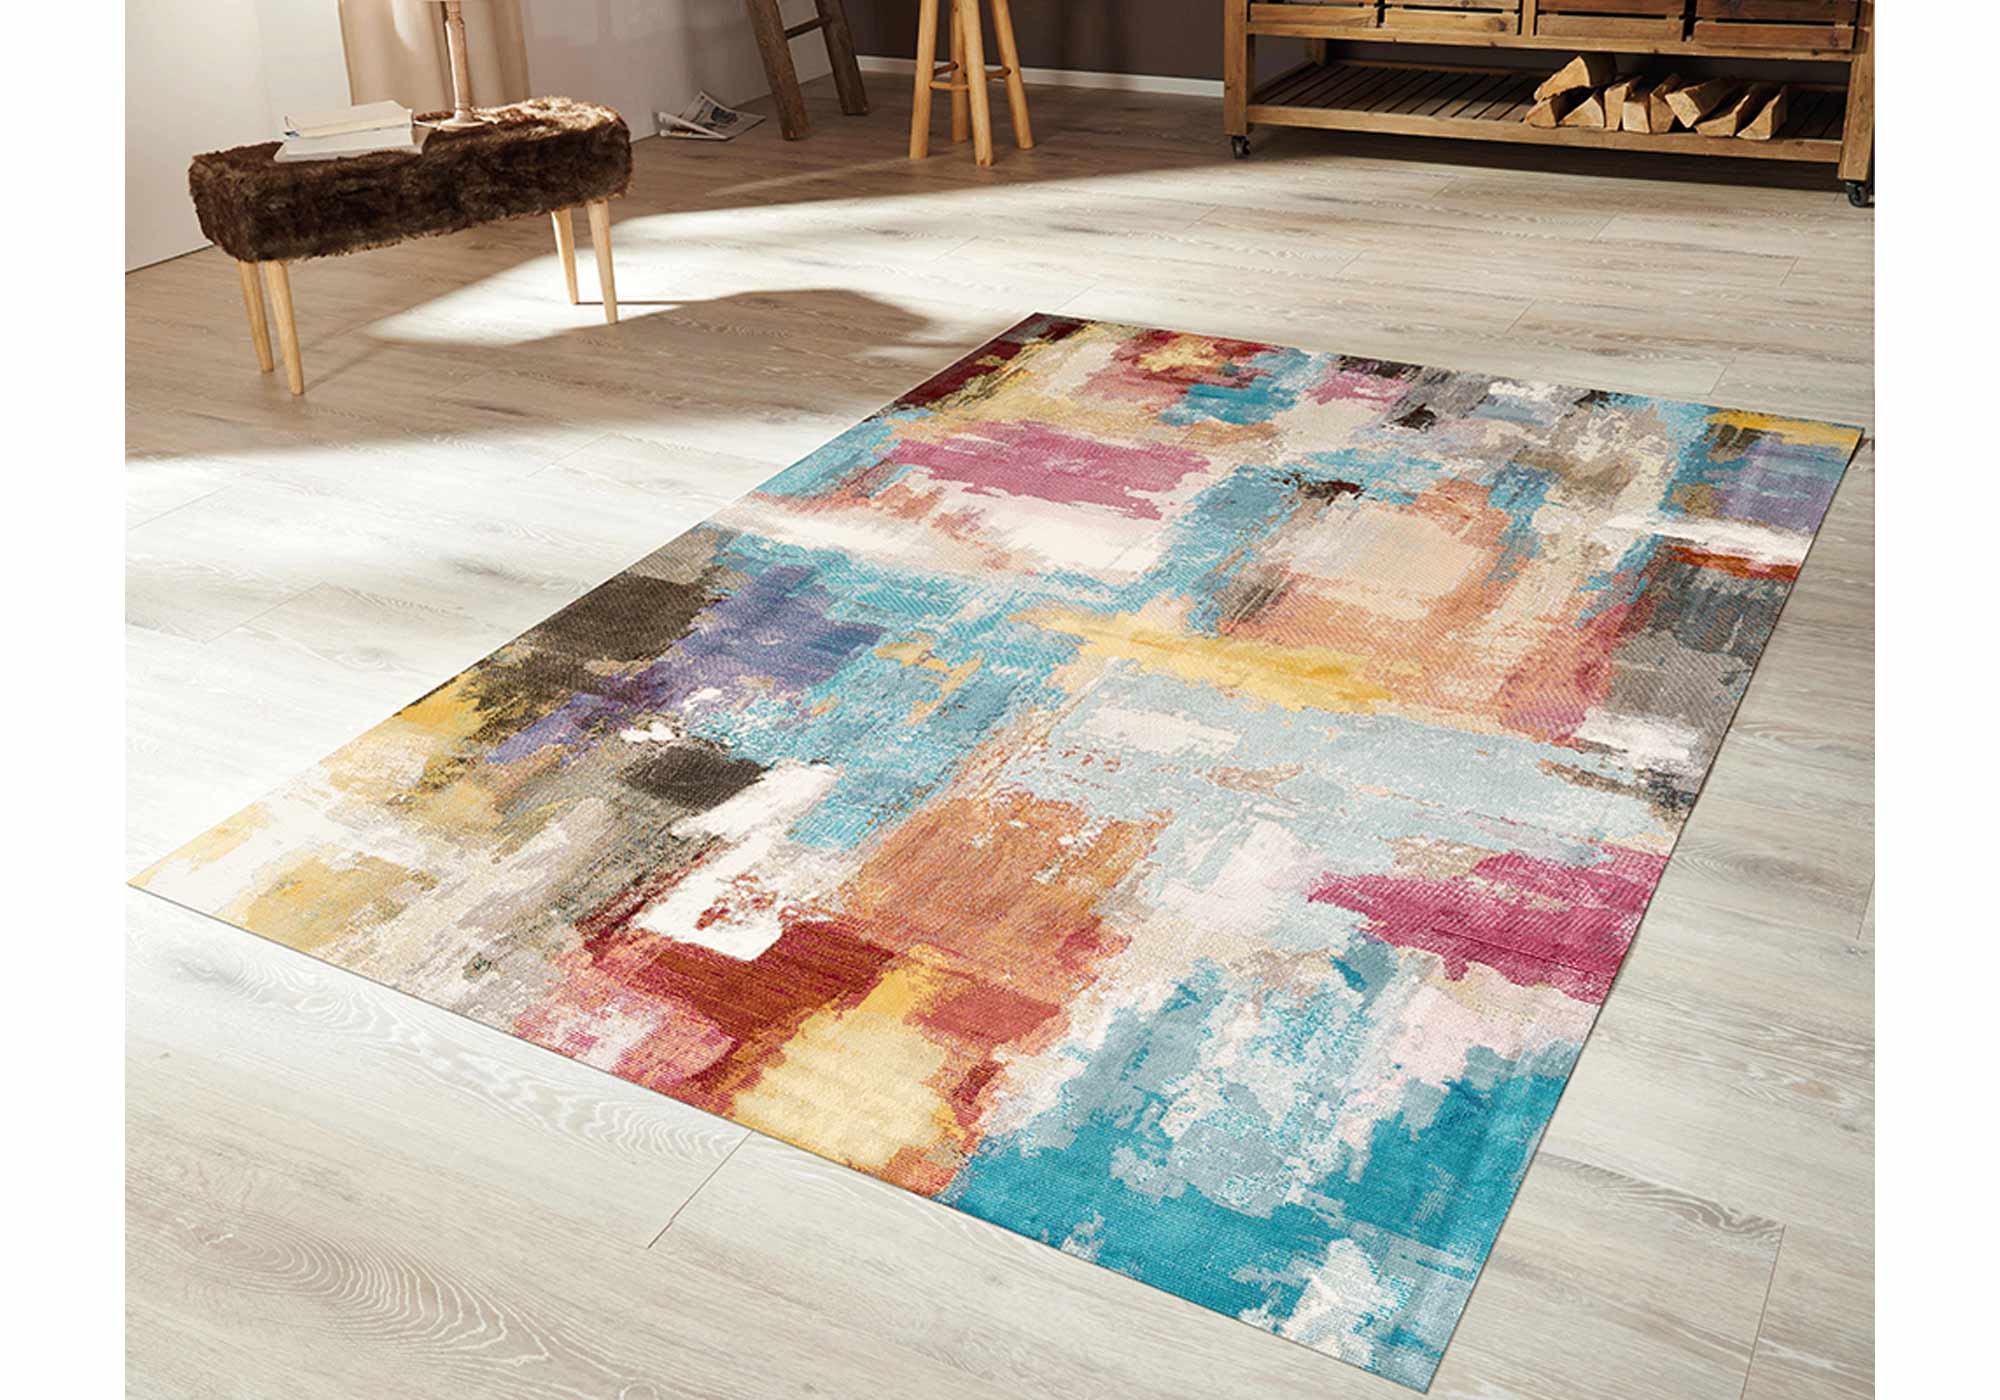 Festival Teppich 133 x 190 cm - mehrfarbig - 6 mm Höhe - Picasso 598